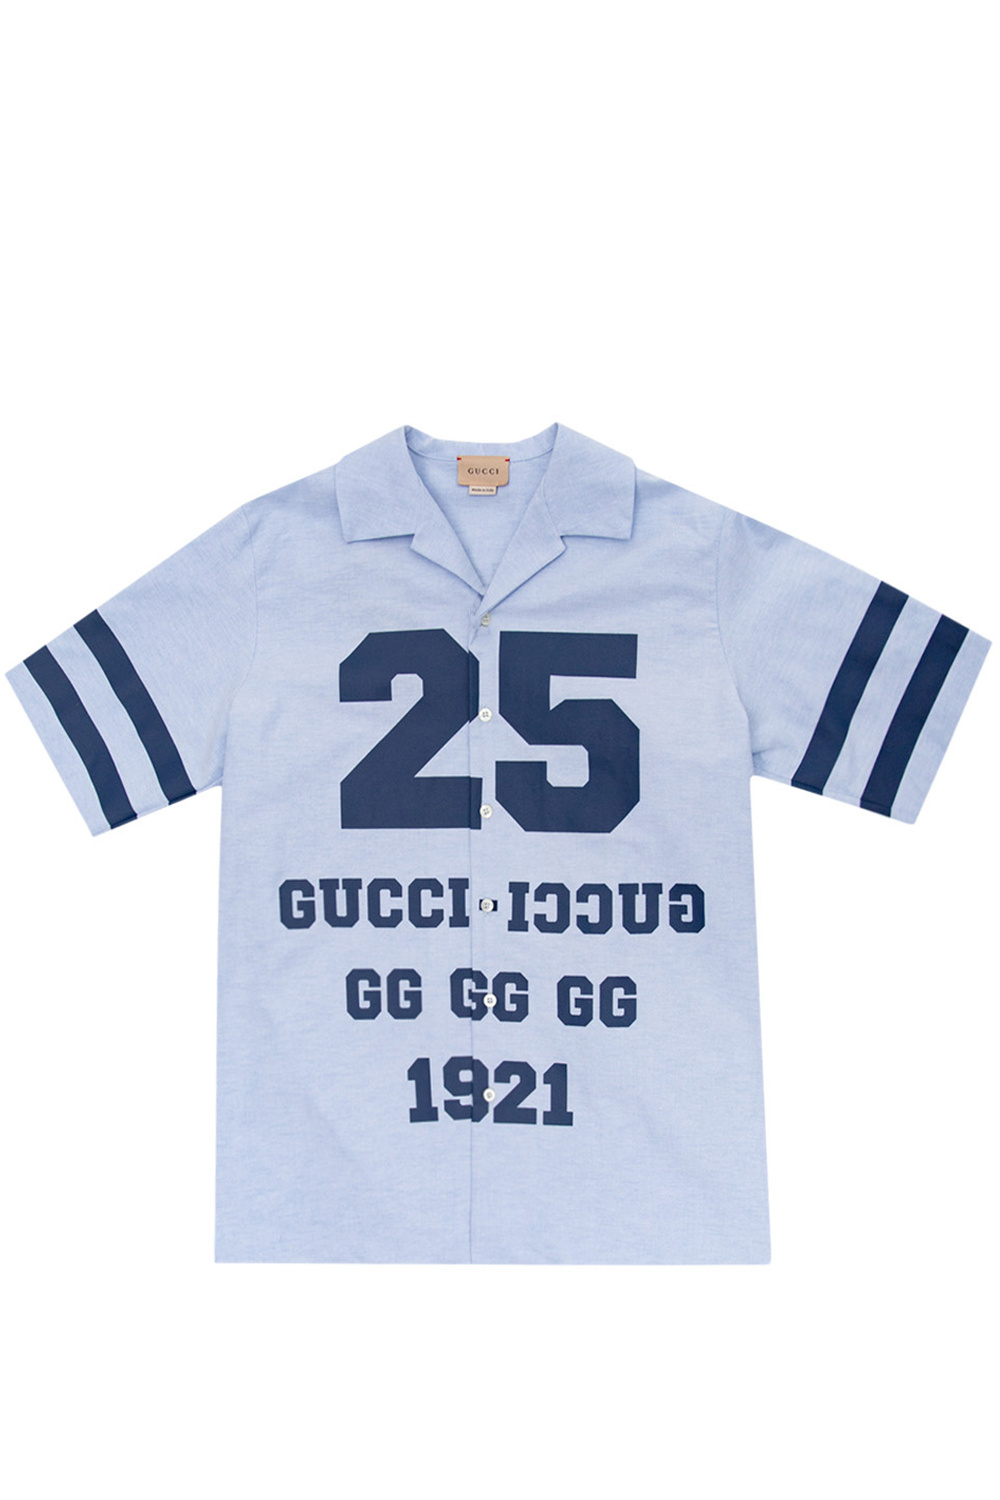 Gucci Kids ‘25 full gucci 1921’ shirt with logo